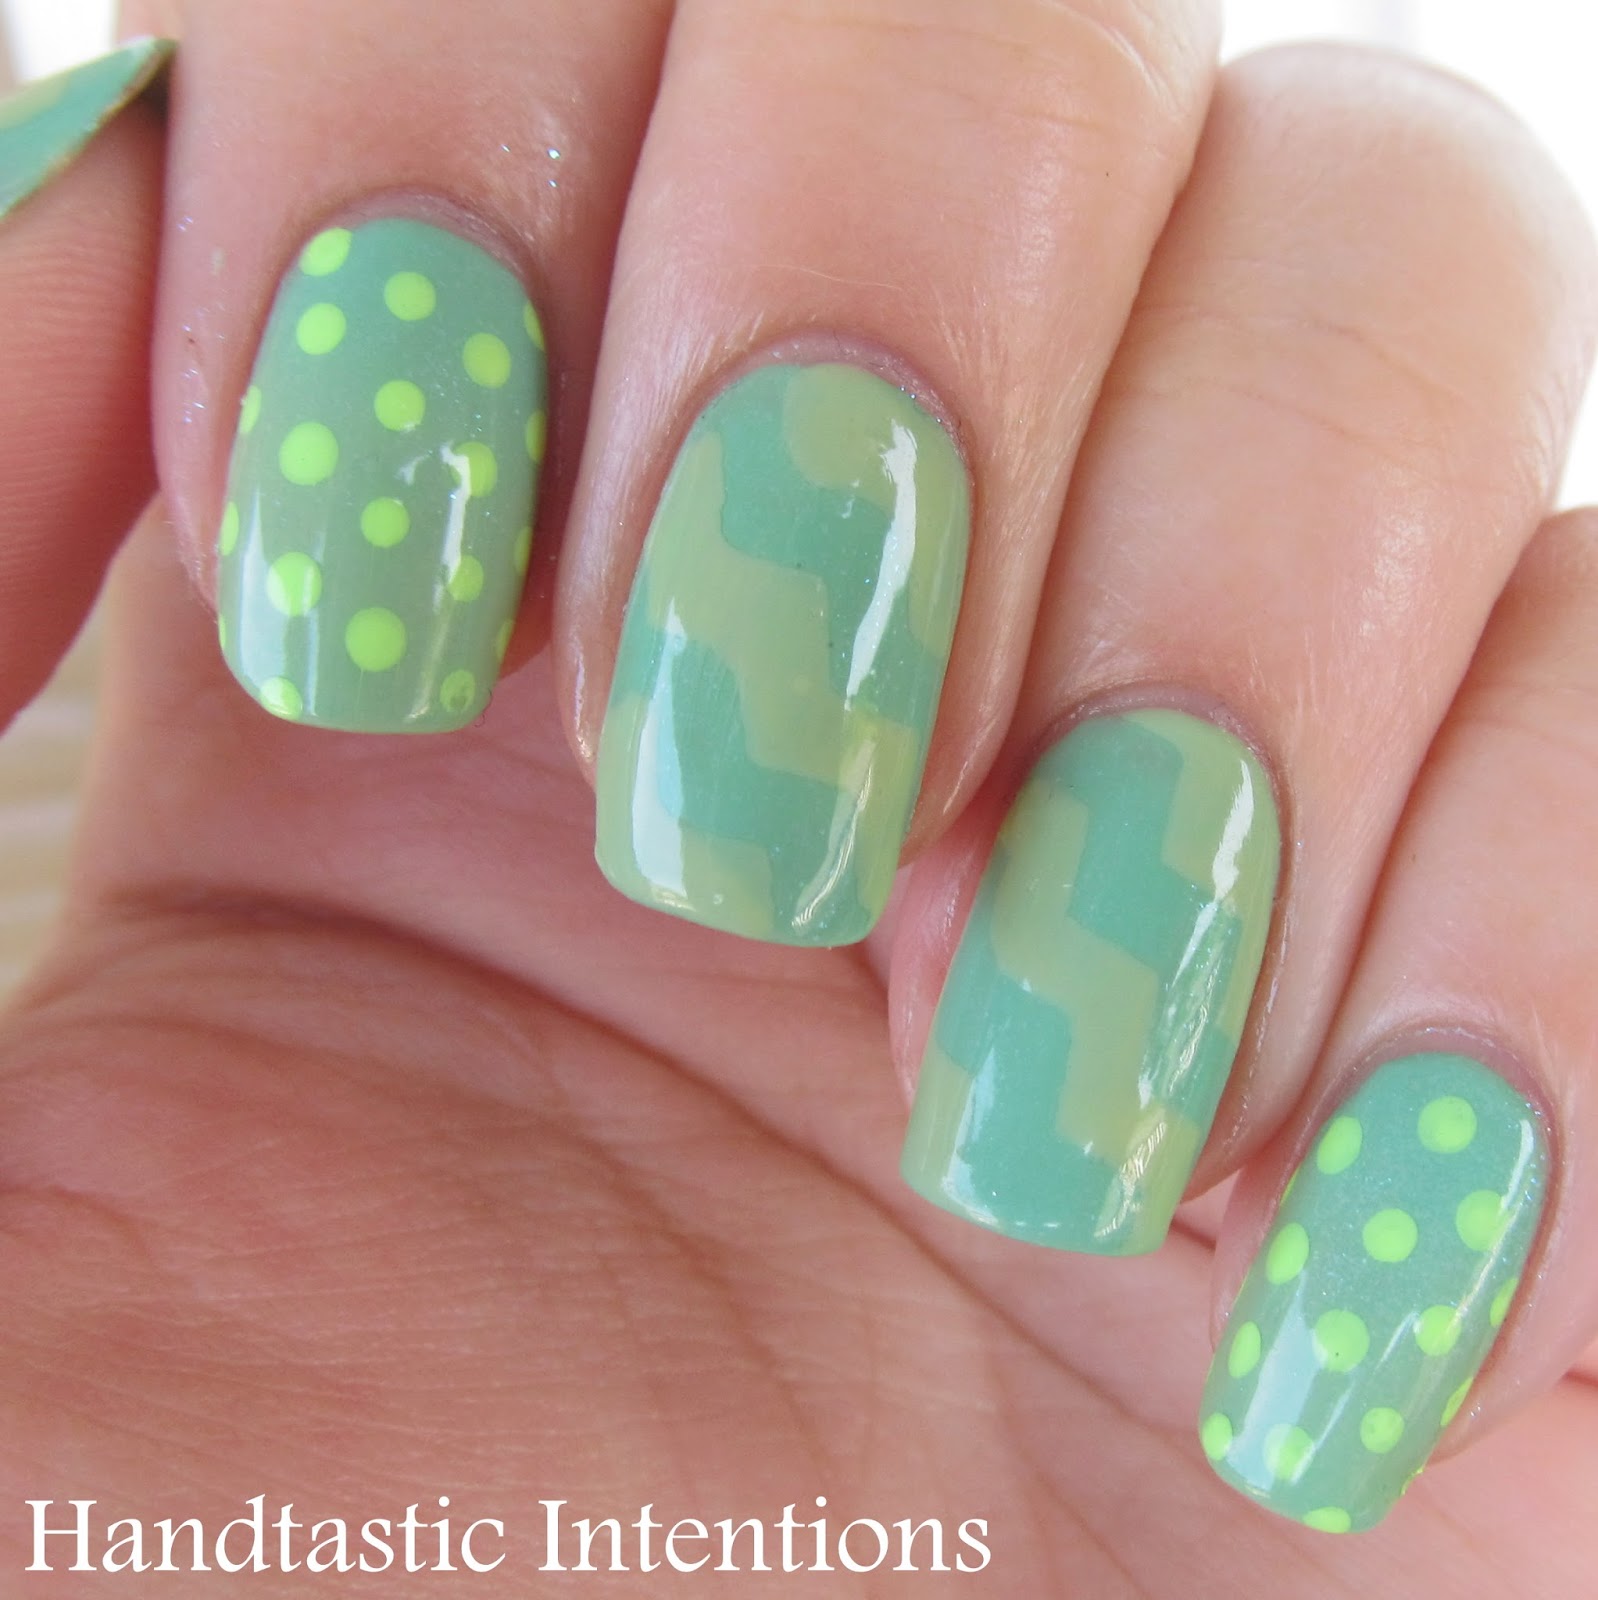 Handtastic Intentions: Nail Art: Green Chevrons and Dots